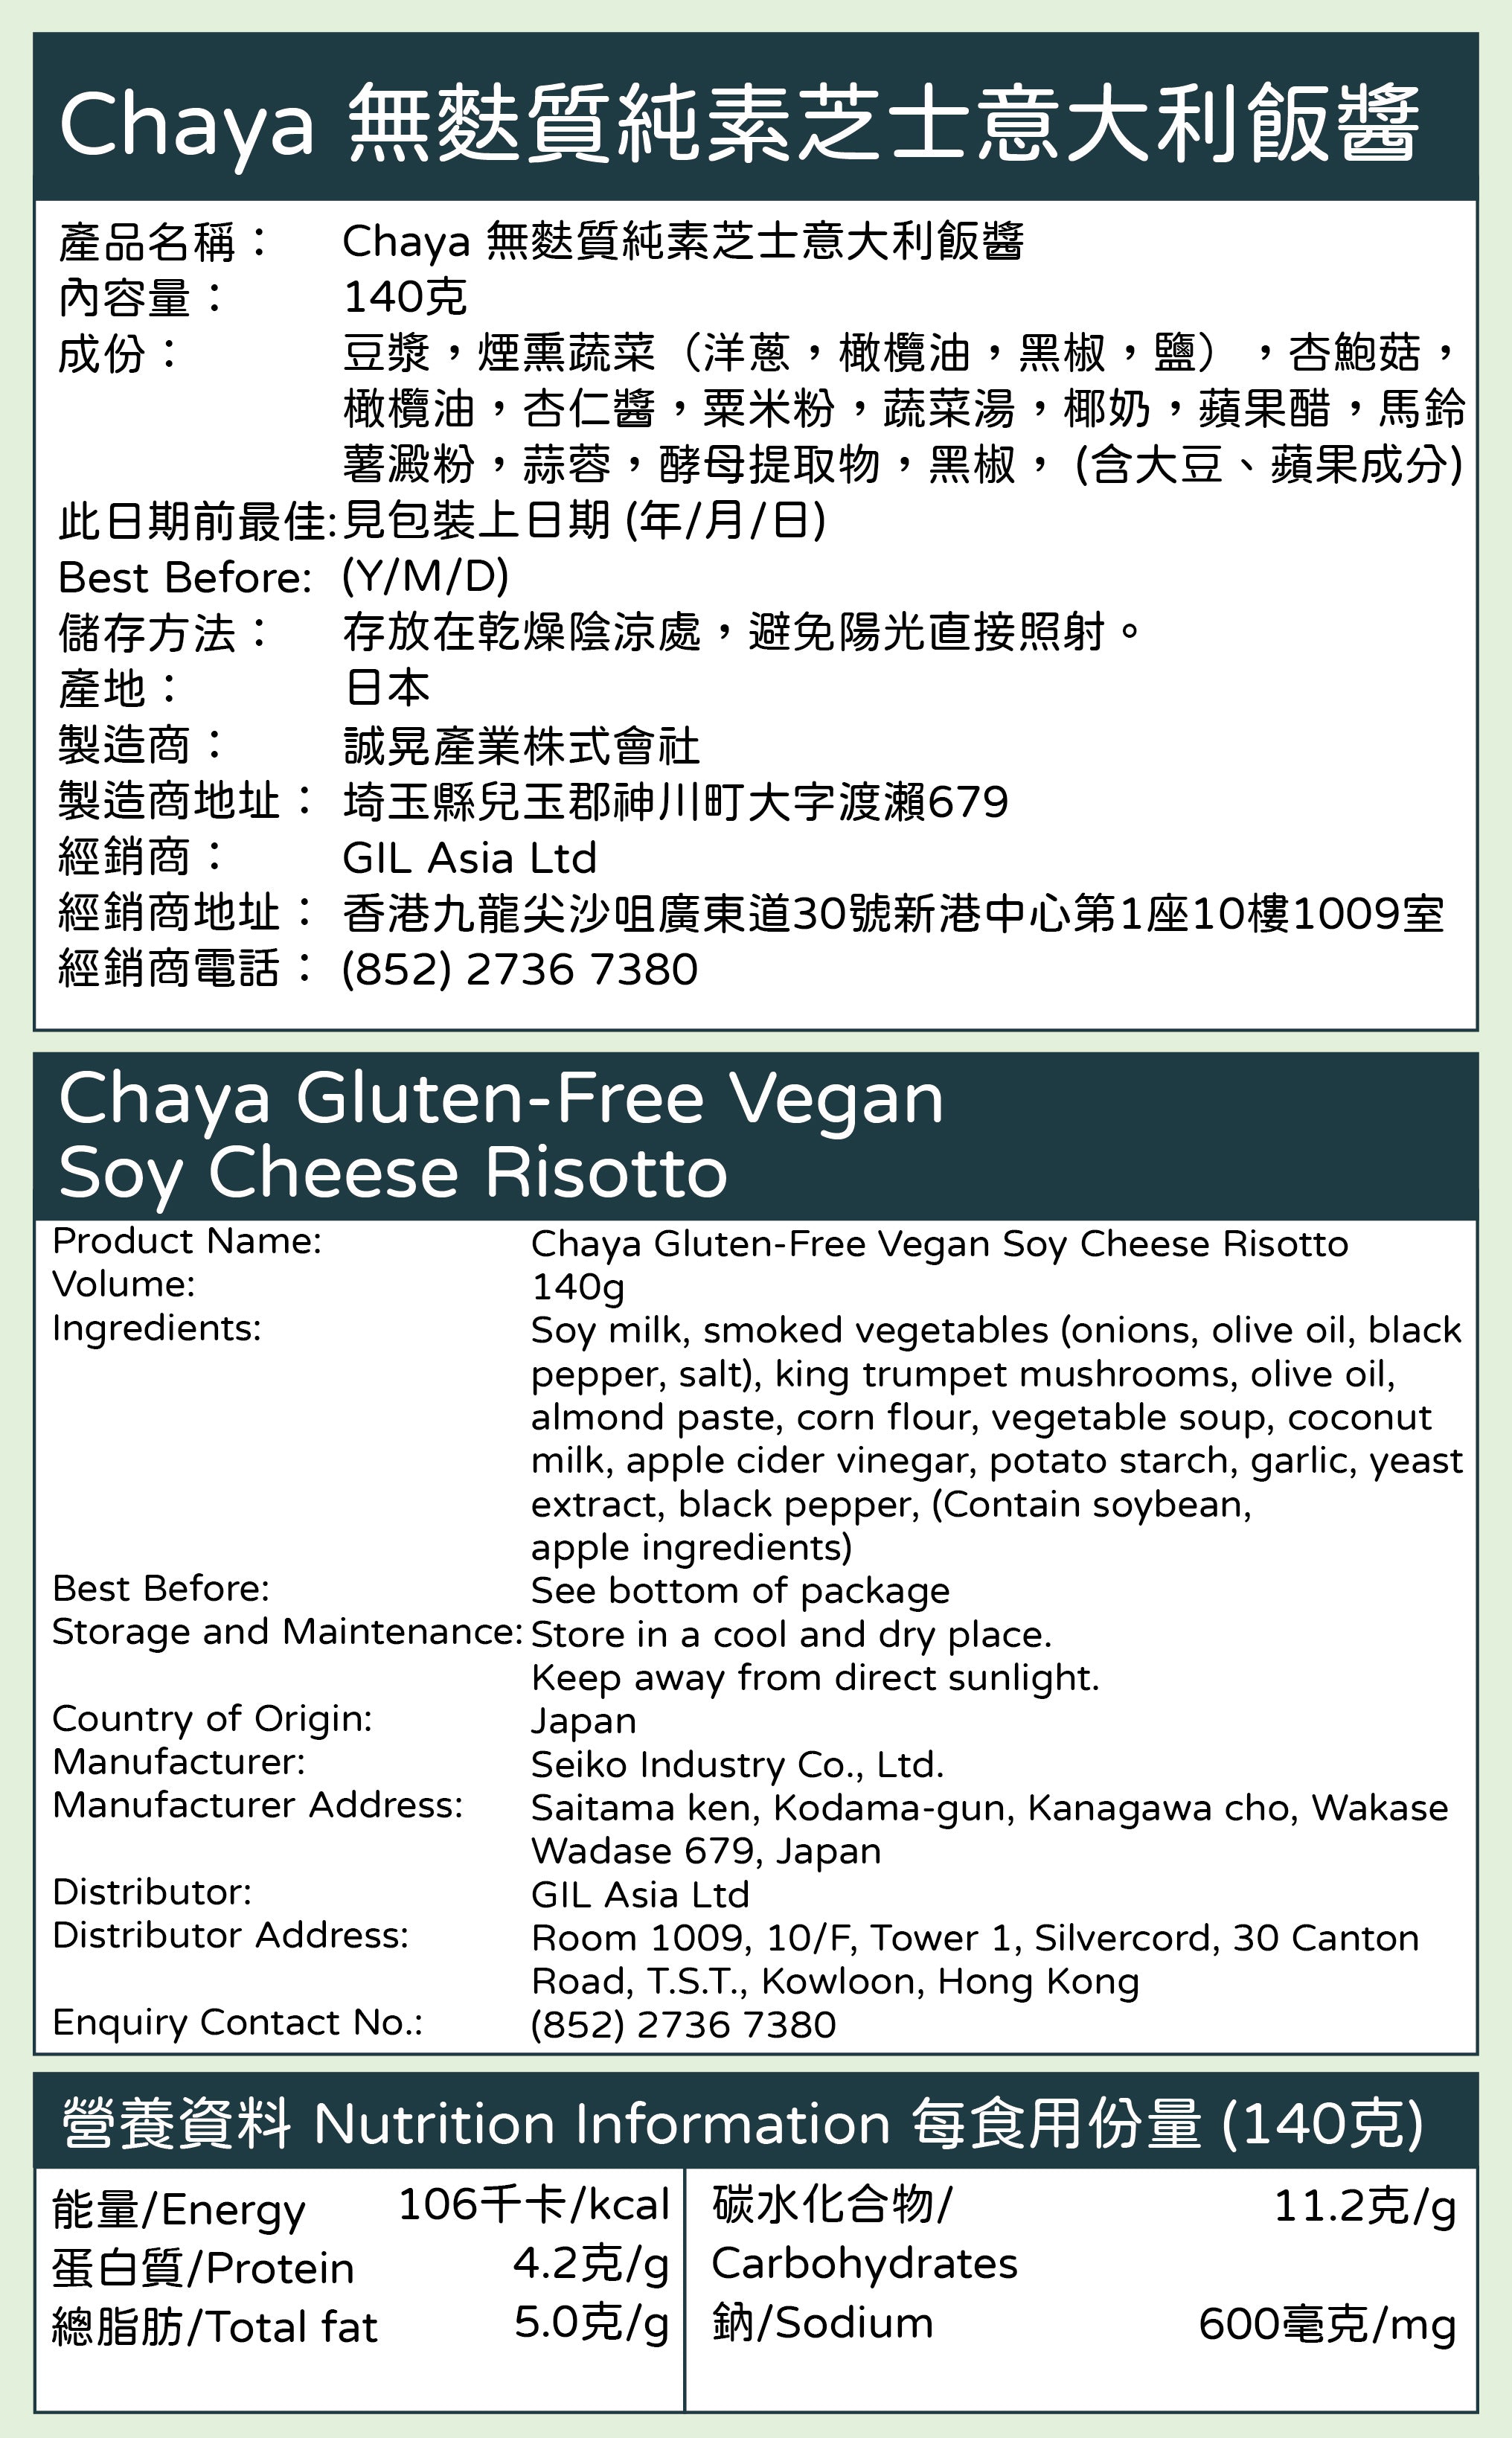 Chaya Gluten-Free Soy Cheese Risotto [140g]